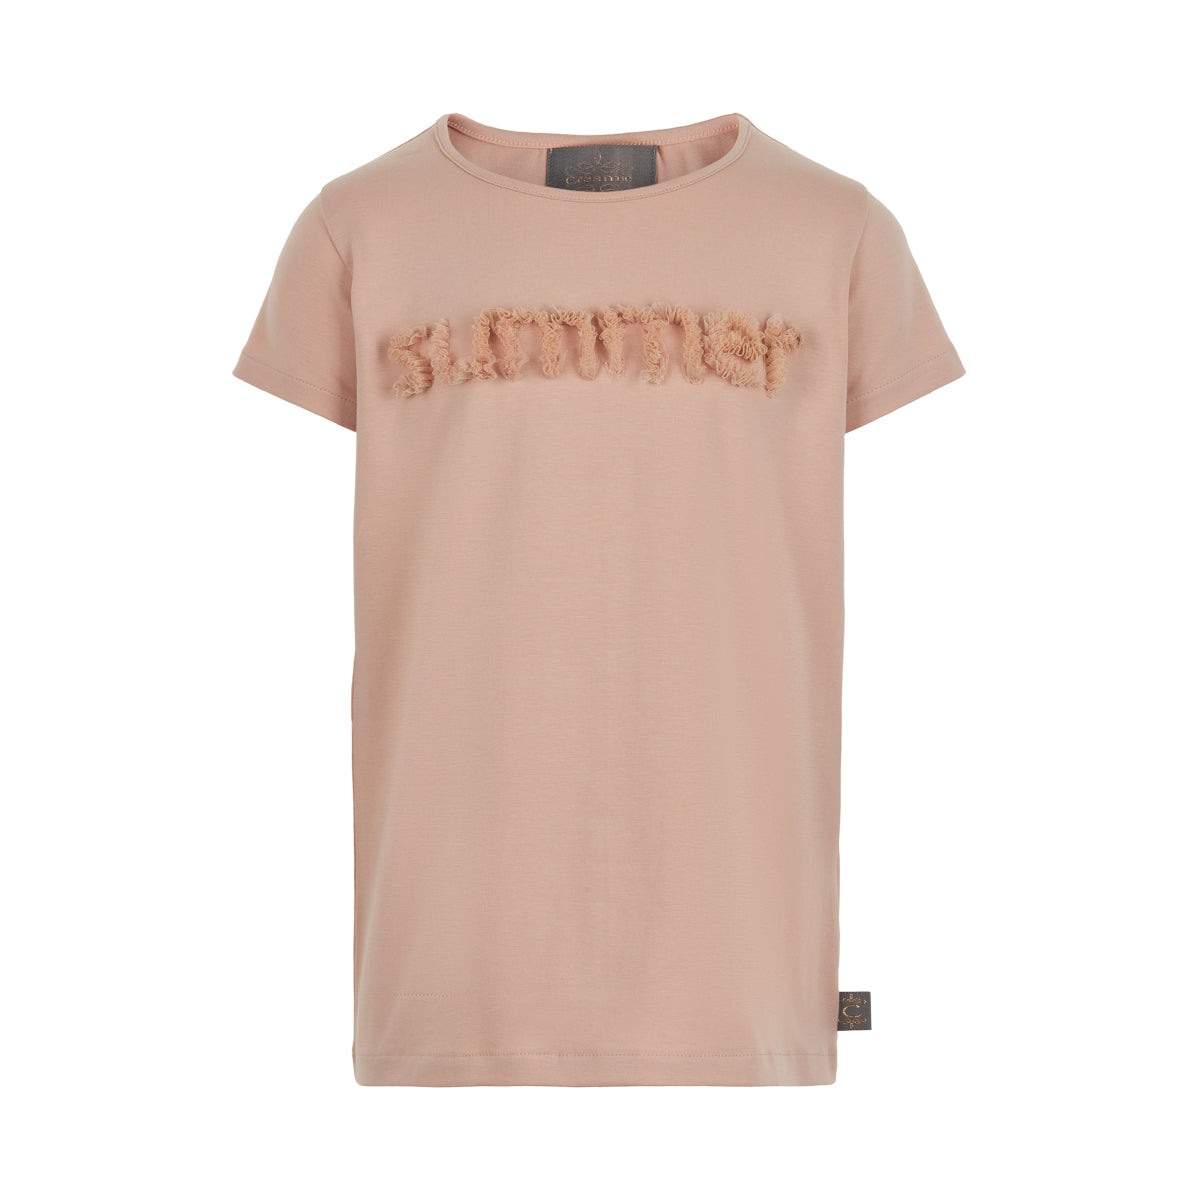 Creamie - T-shirt Summer SS (821692) - Rose Smoke